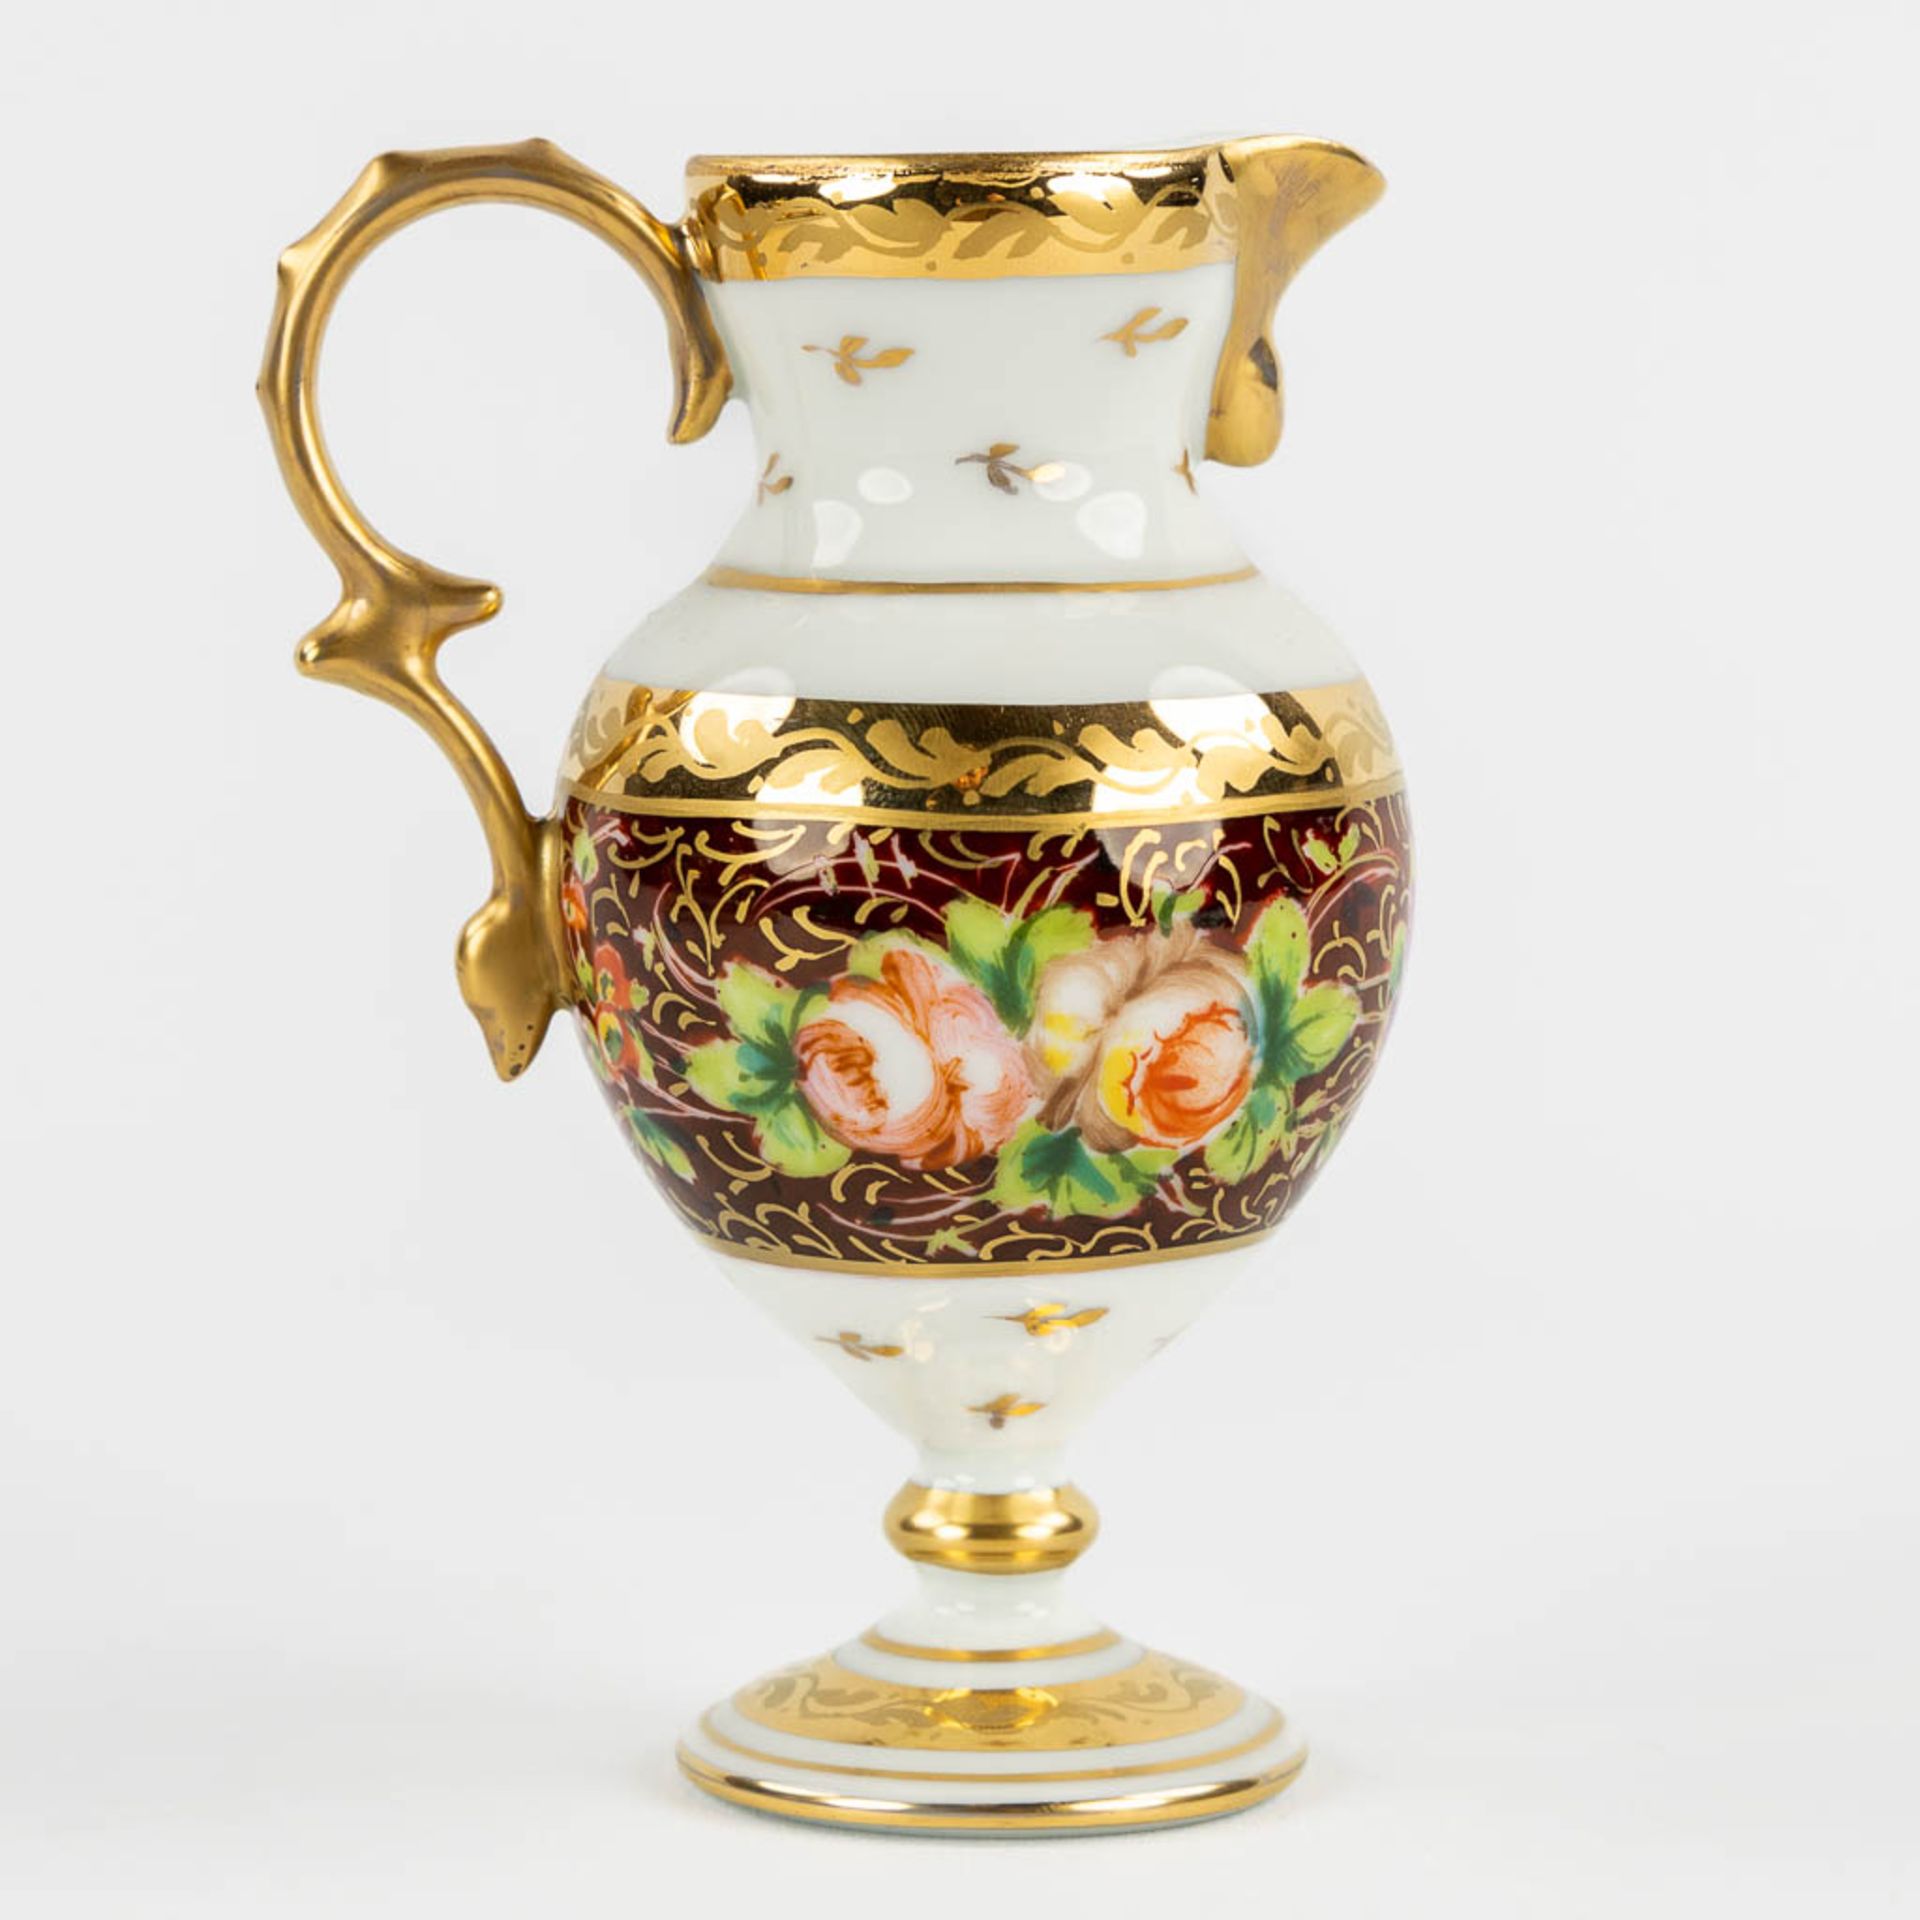 Giraud Limoges, a porcelain 'Tête à tête' coffee service. 20th C. (H:18 cm) - Image 16 of 18